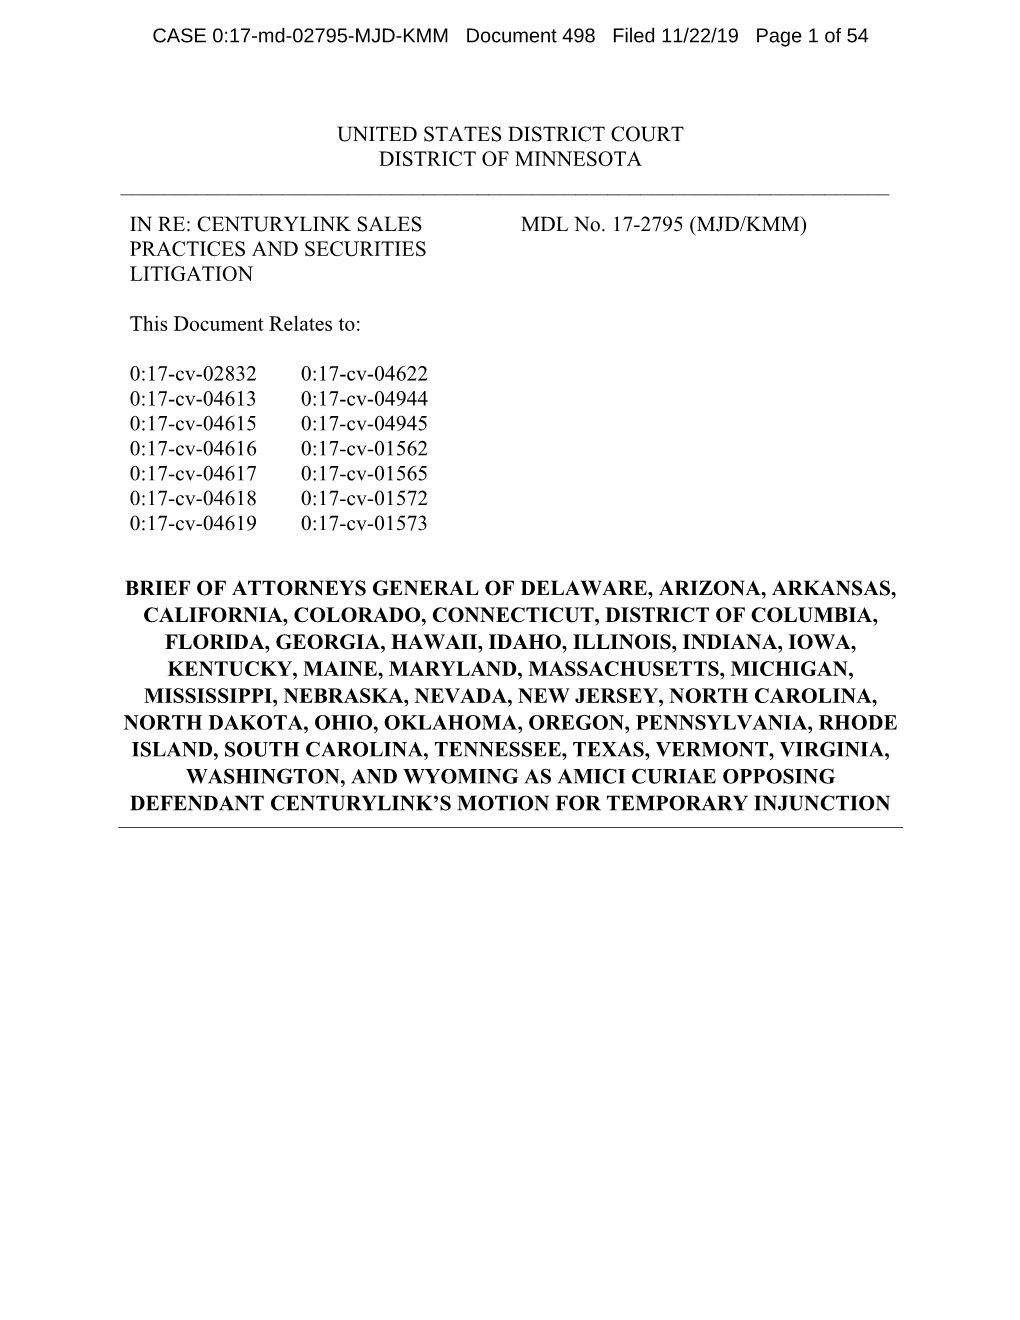 Amicus Opposing Defendants' Motion for Preliminary Injunction